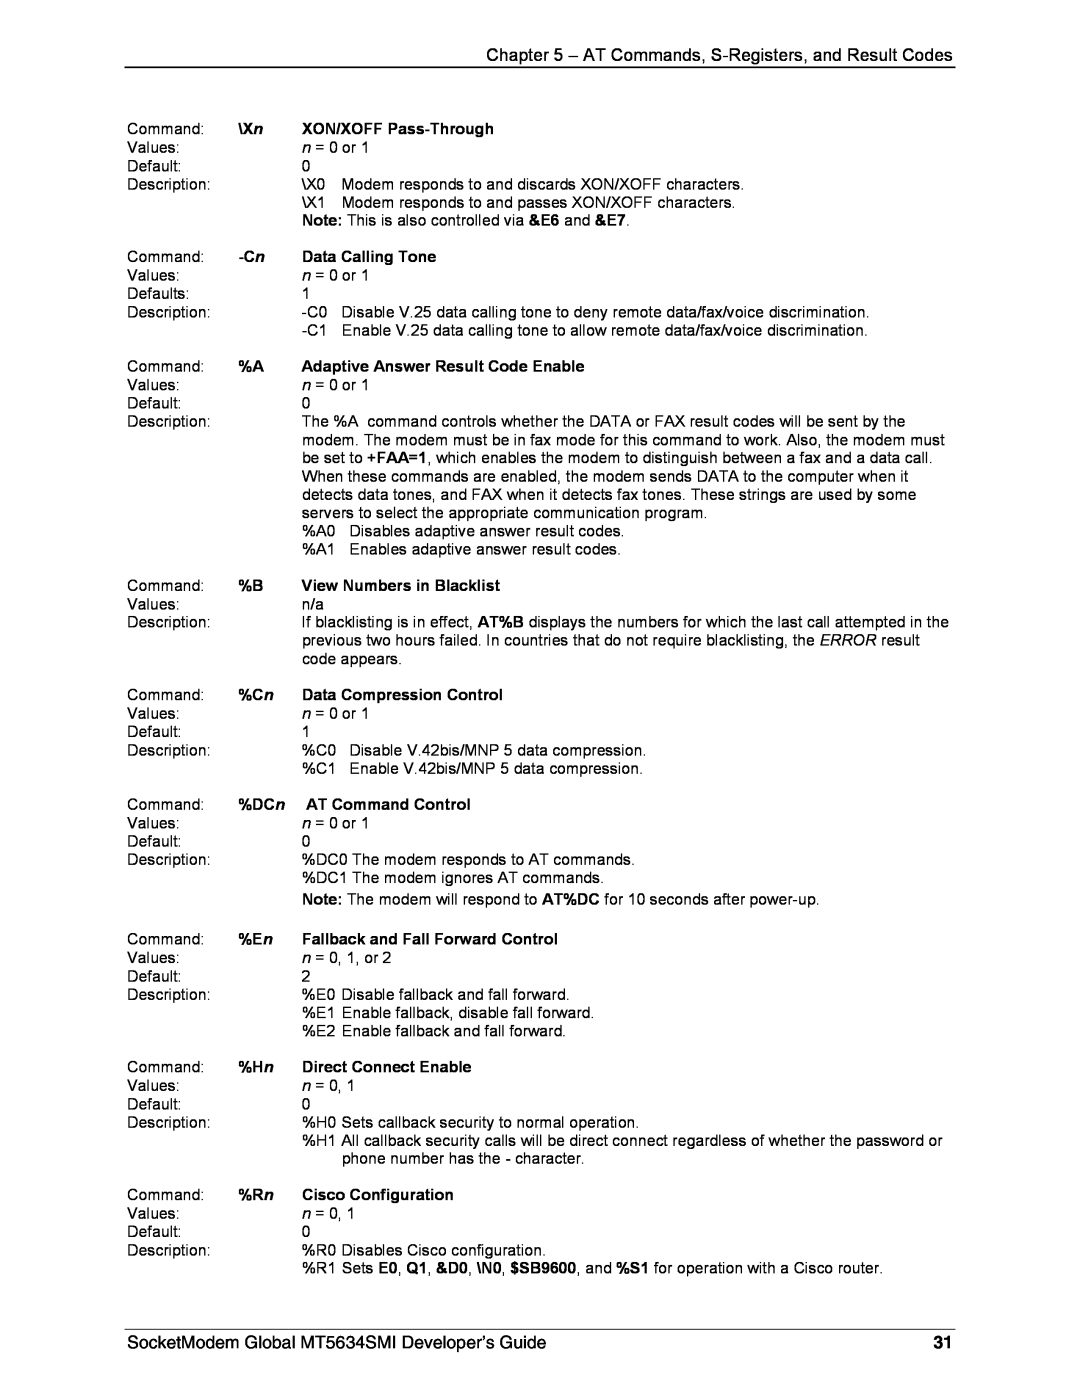 Technics MT5634SMI-34 manual AT Commands, S-Registers, and Result Codes, SocketModem Global MT5634SMI Developer’s Guide 